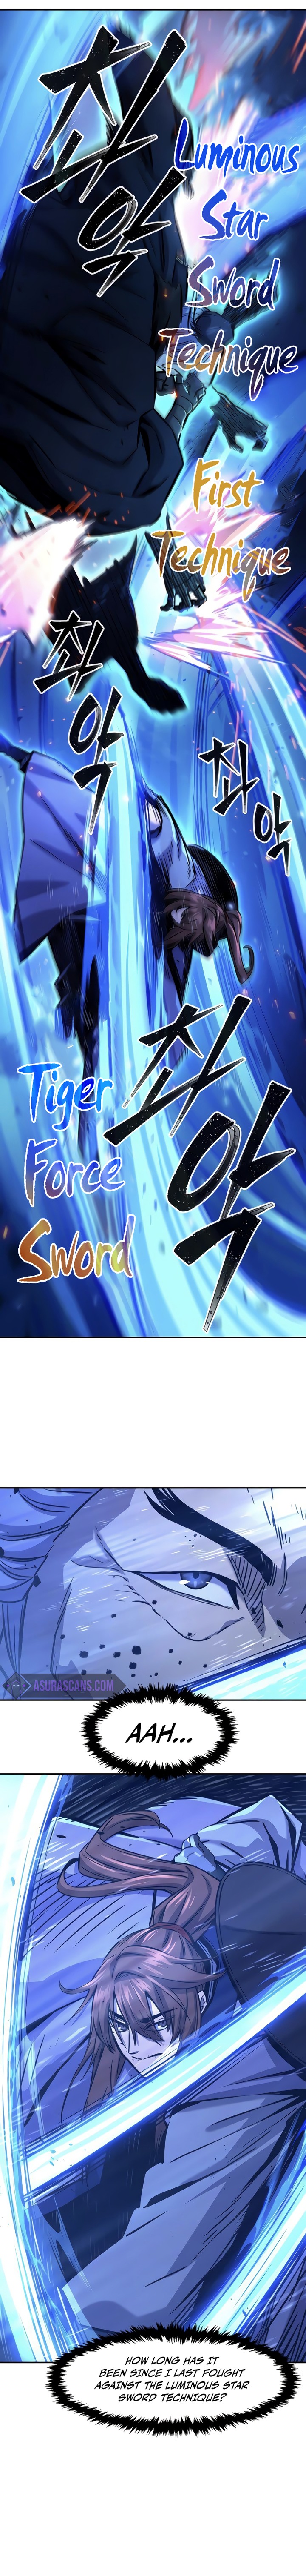 Absolute Sword Sense 66 9